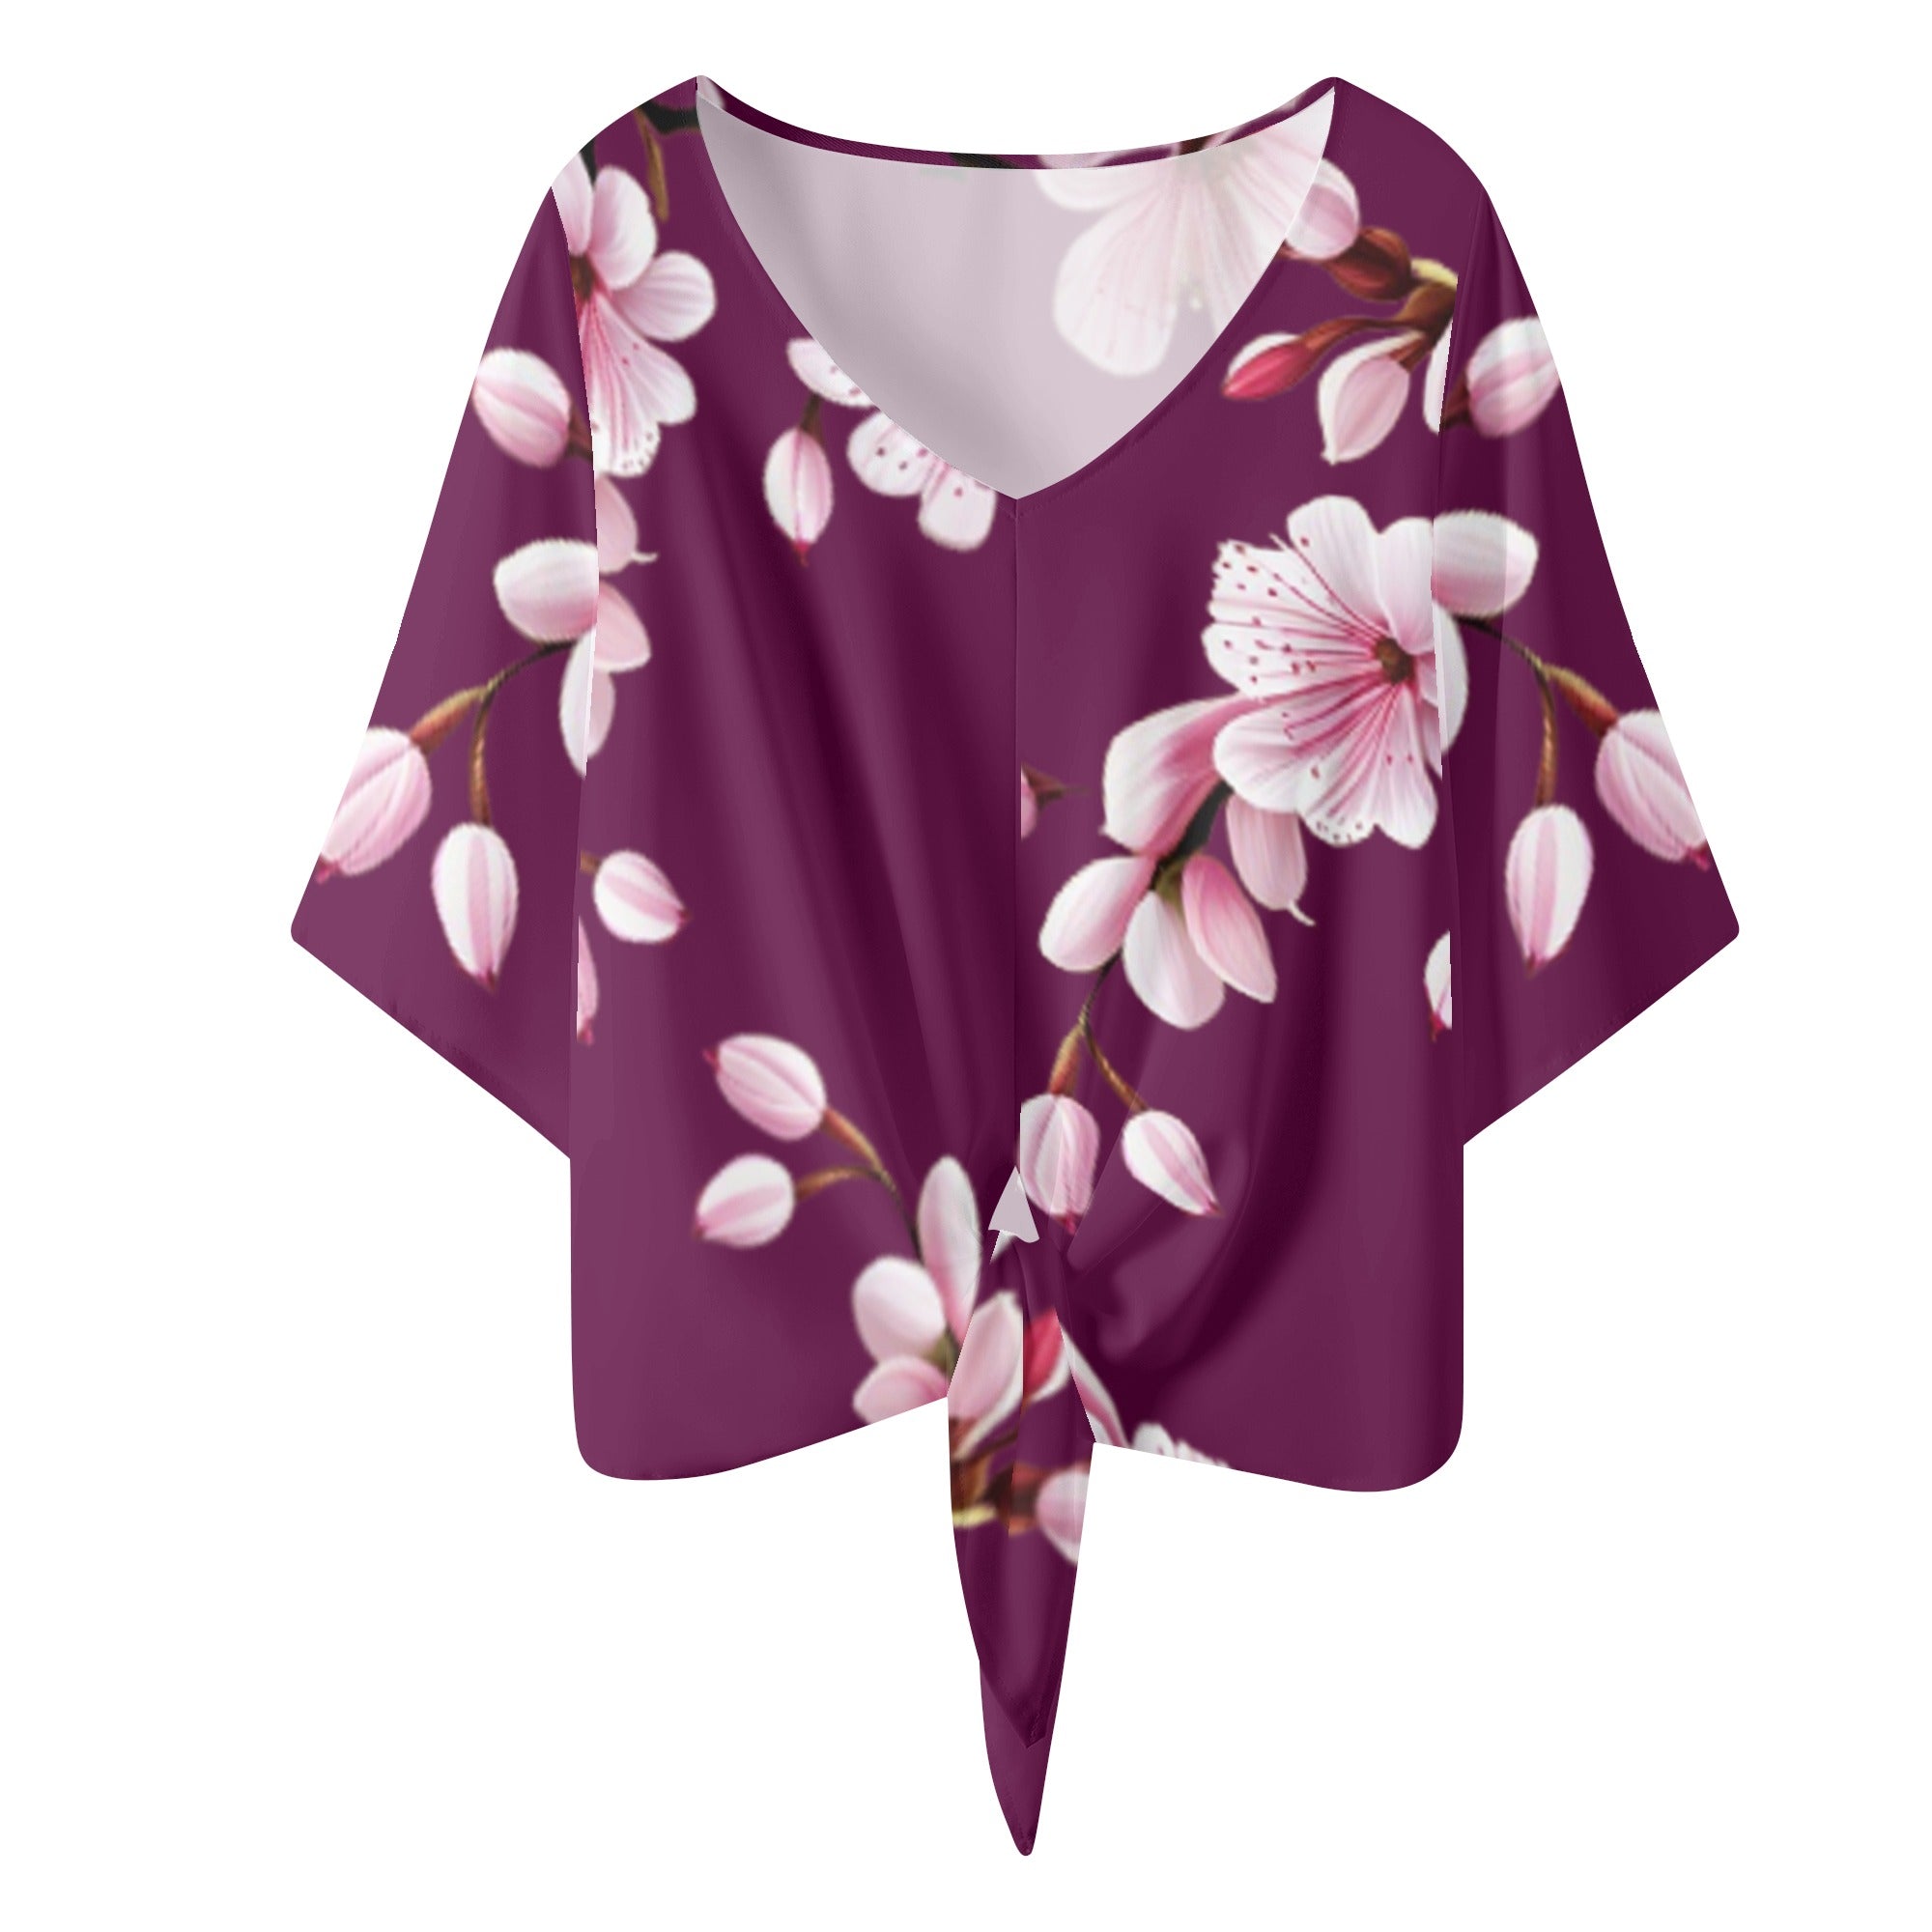 Cherry Blossom Women‘s’ V-neck Streamers Blouse - 4 colors - women's blouse at TFC&H Co.